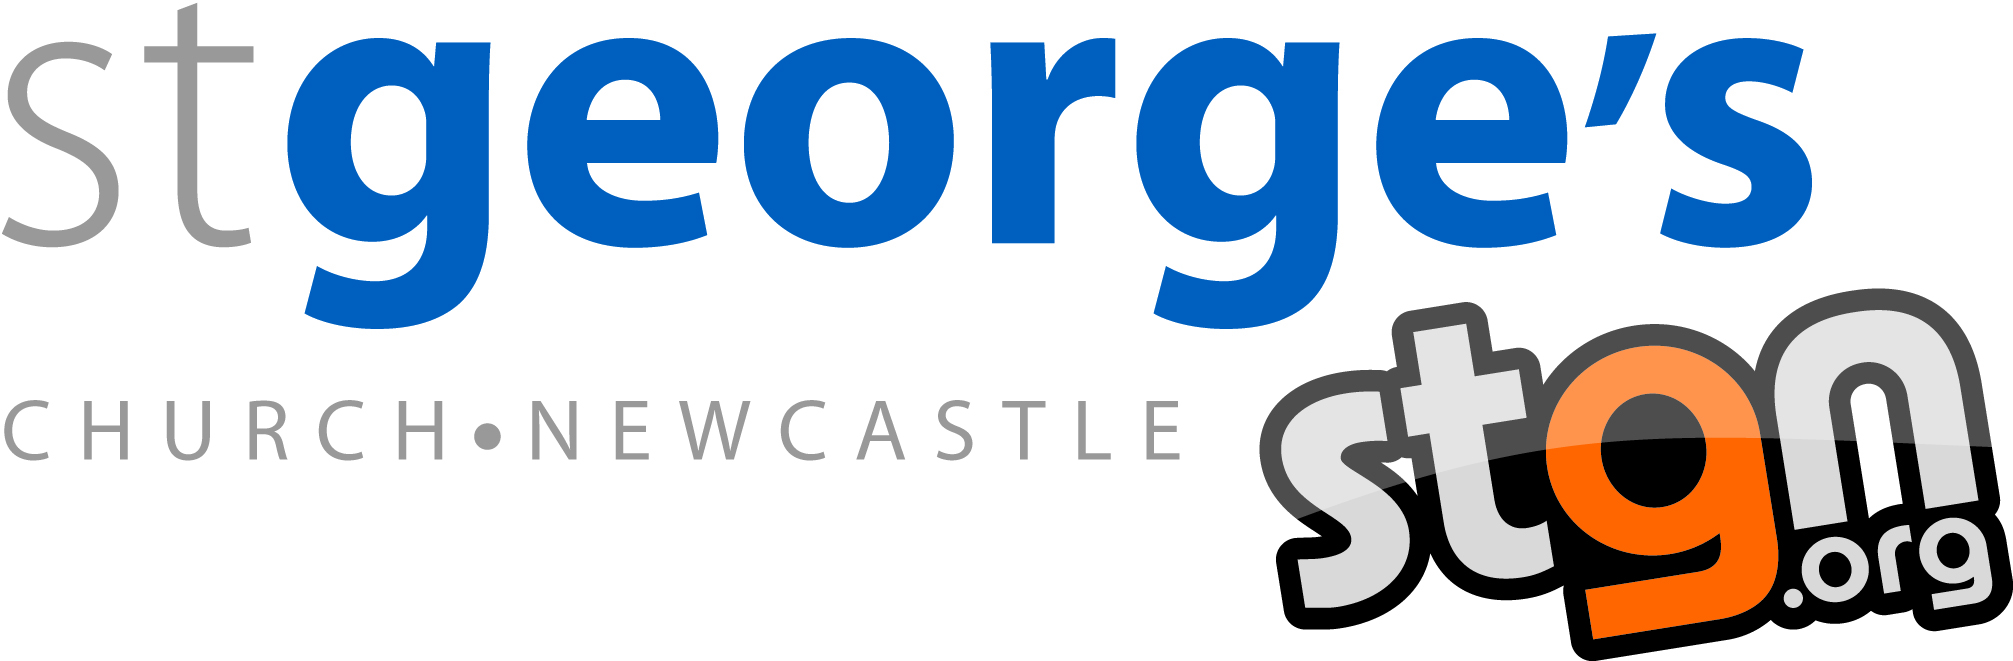 St George's Newcastle - stgn